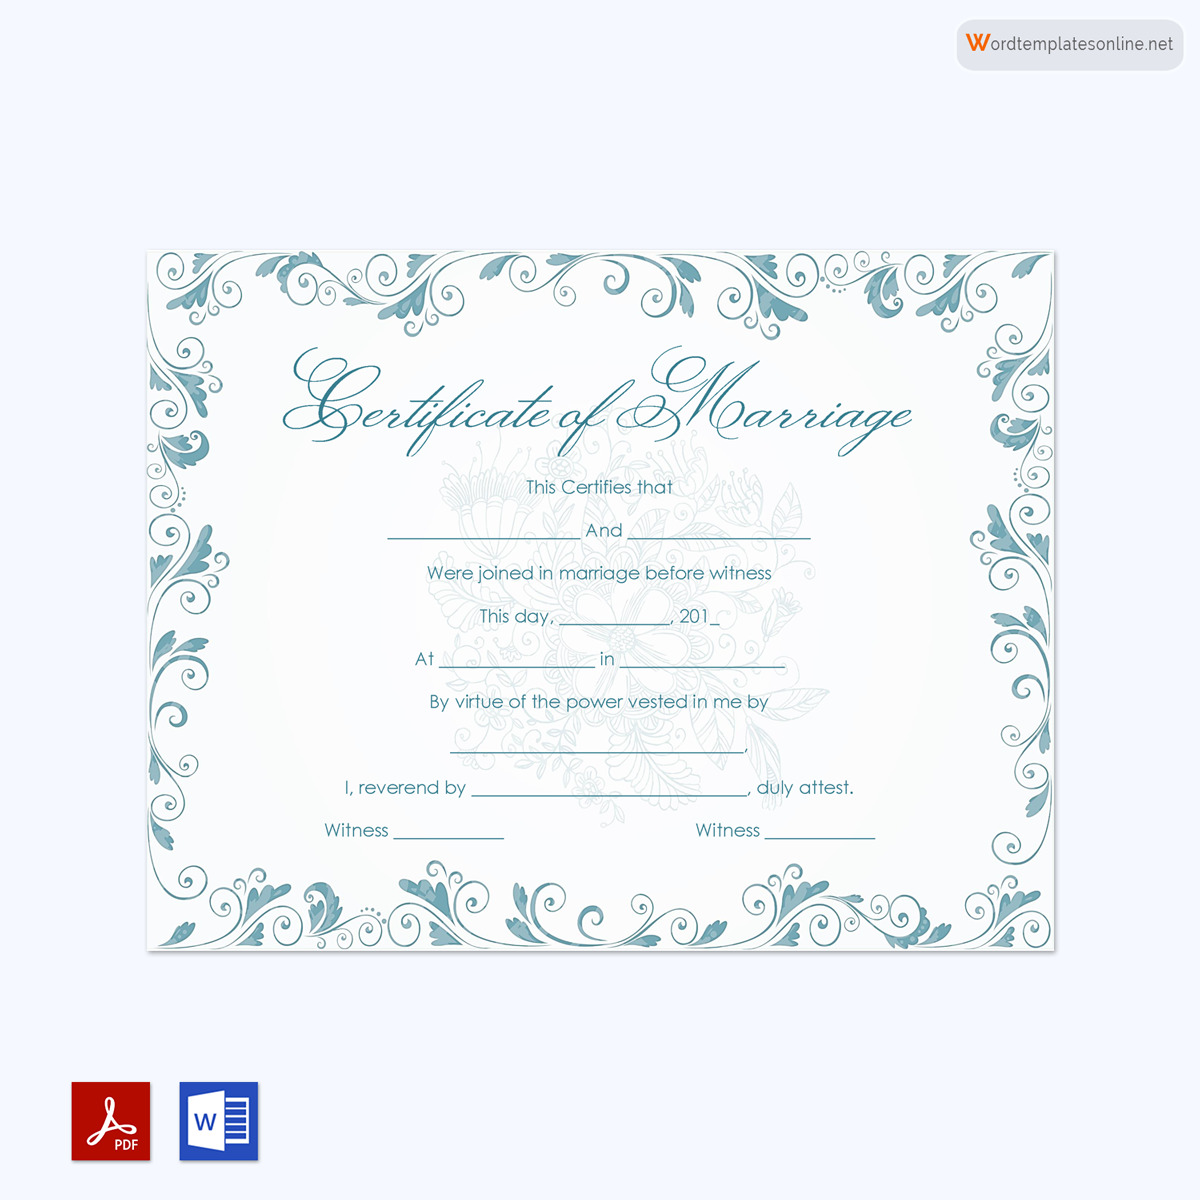  online marriage certificate 08